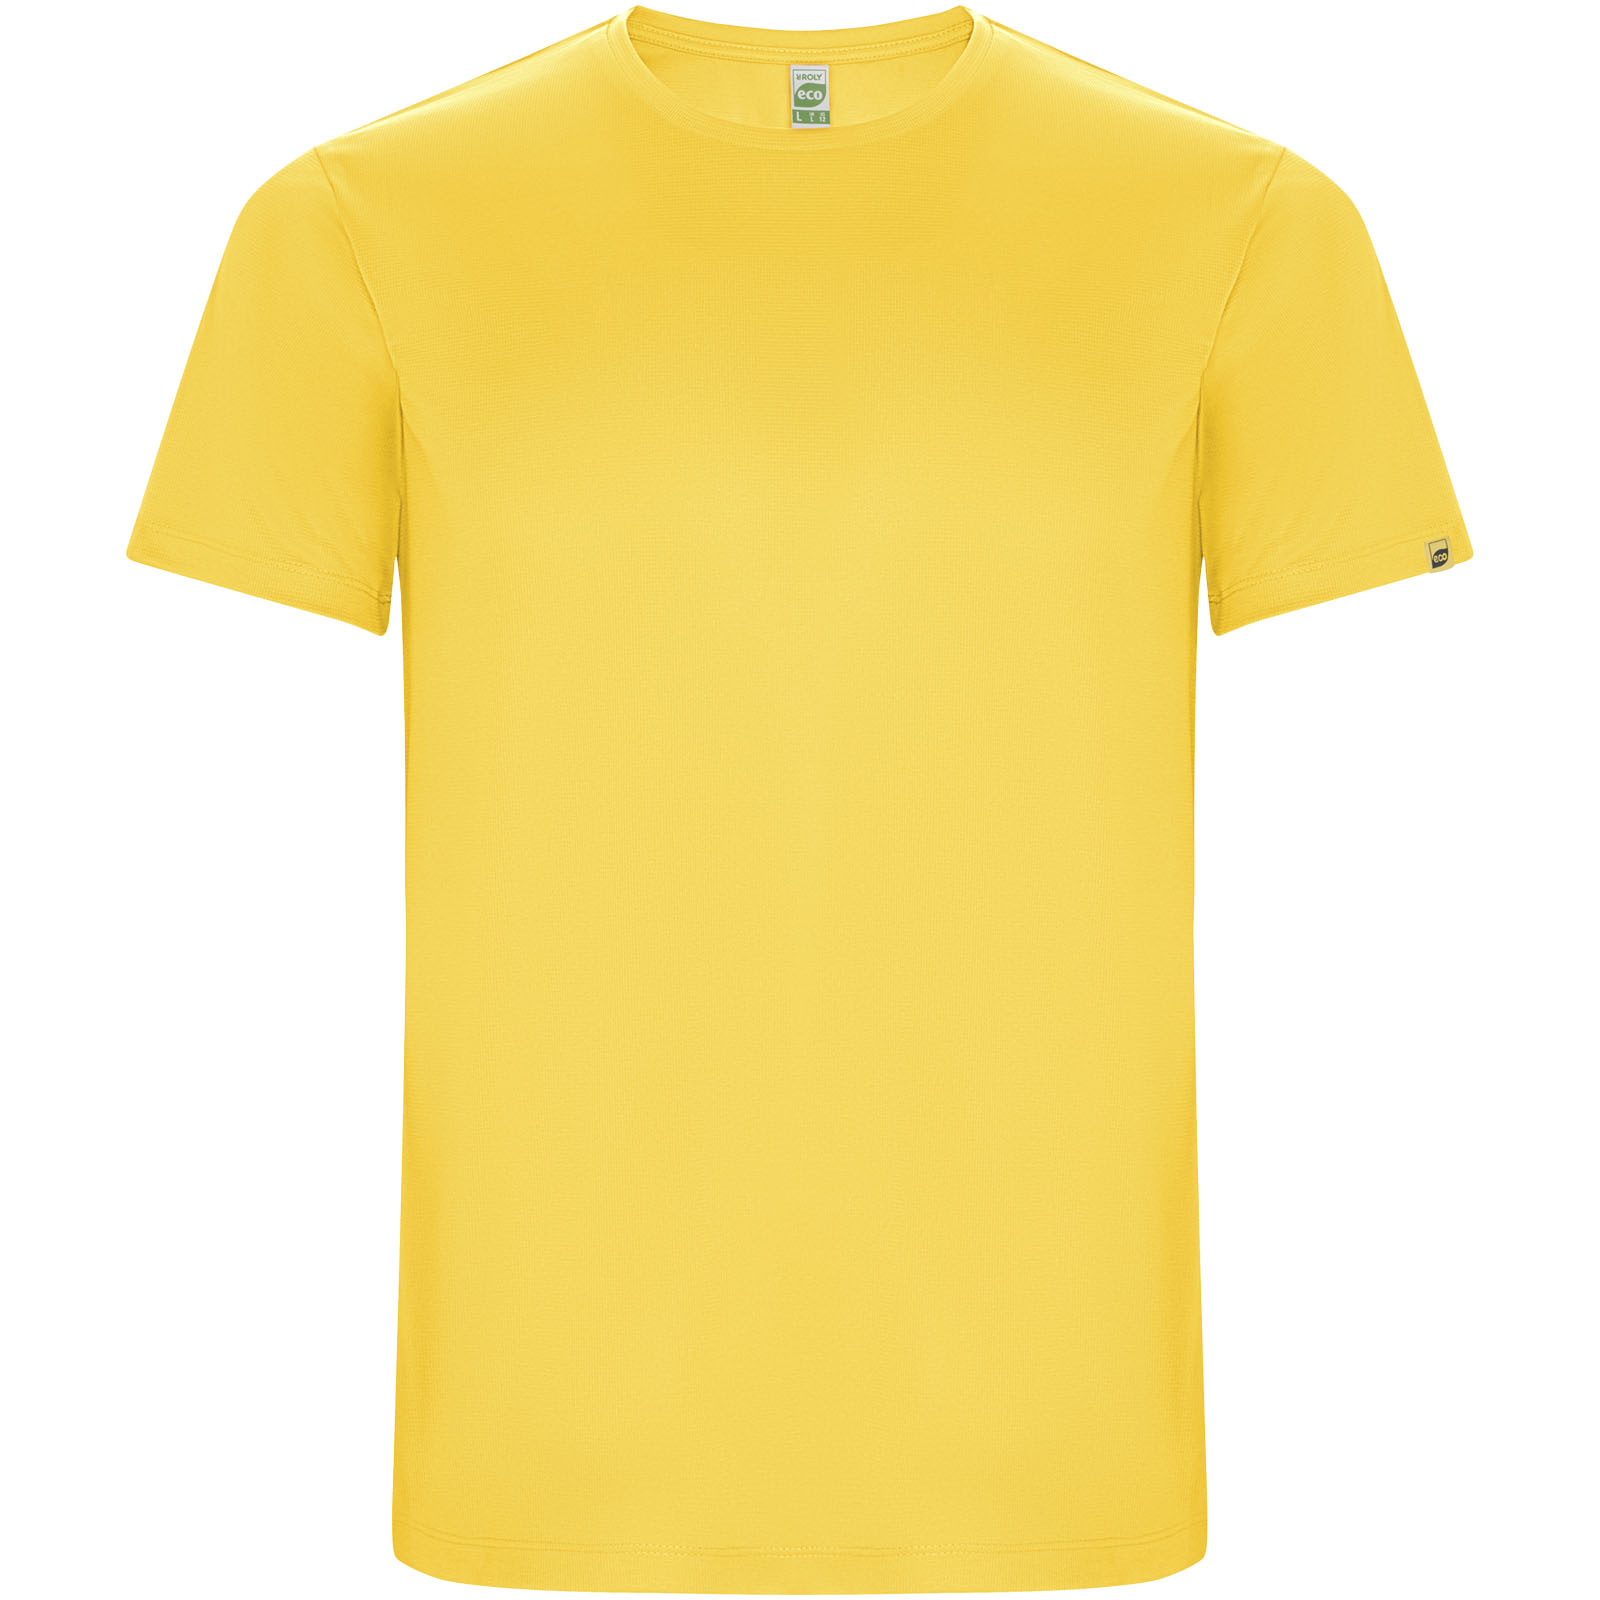 Advertising T-shirts - Imola short sleeve kids sports t-shirt